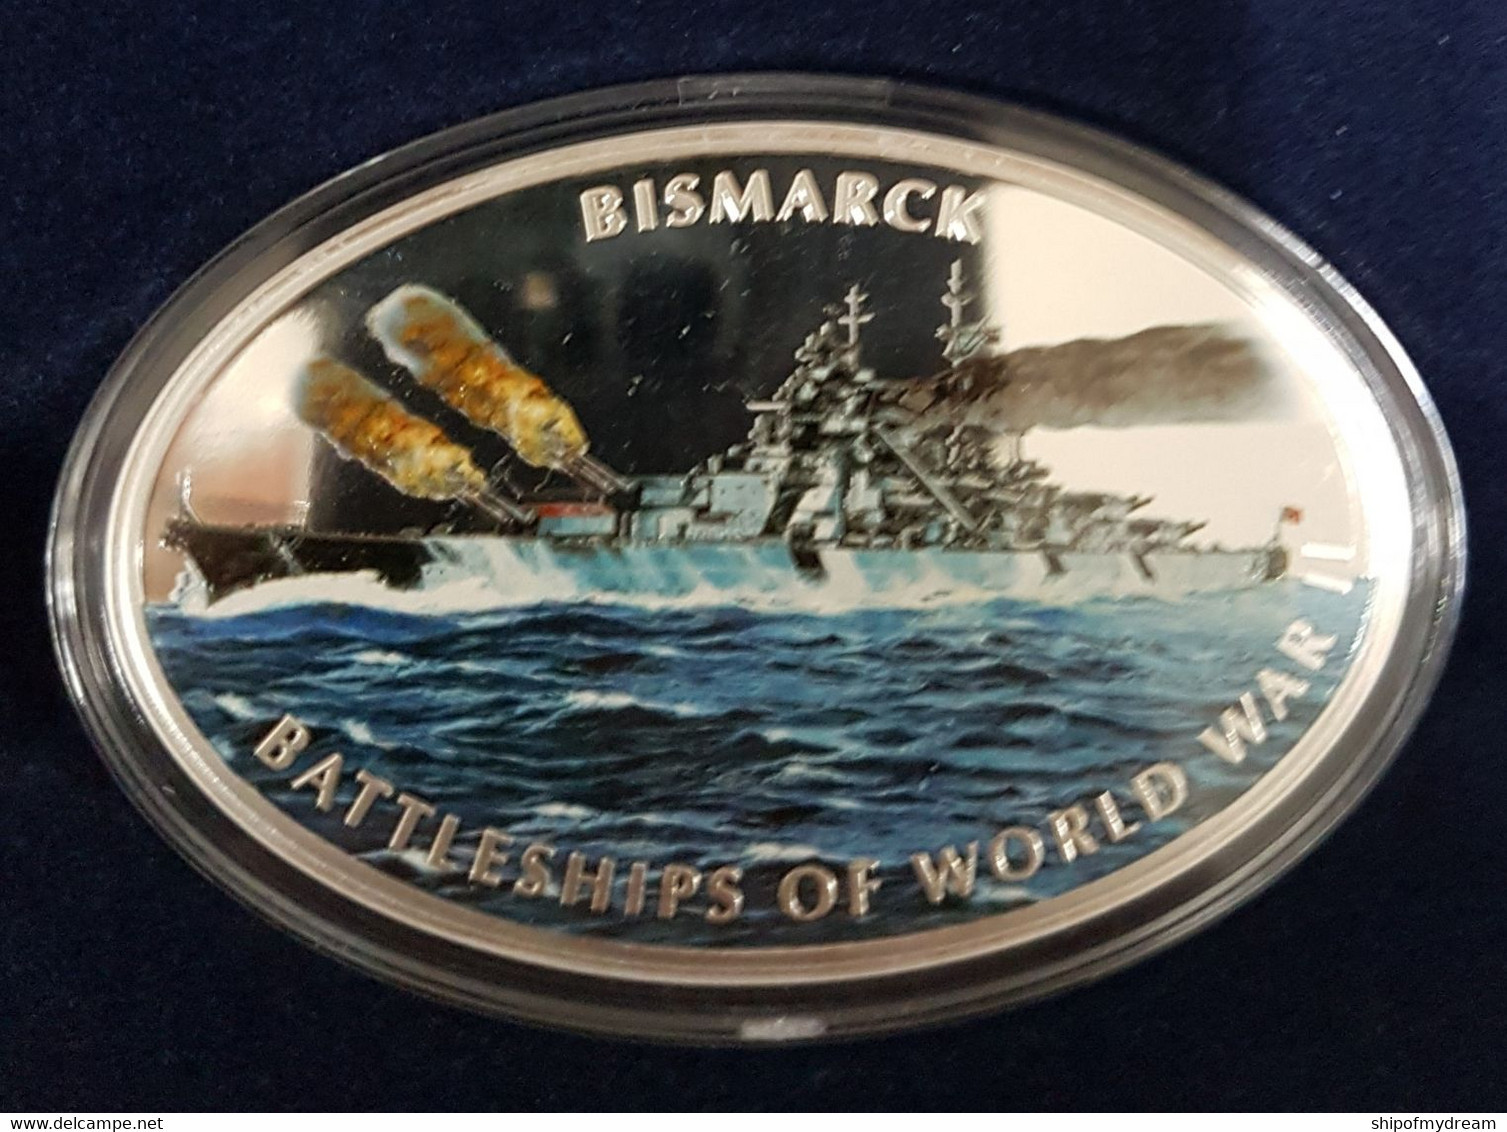 Tokelau 1$ 2013 "Battleships Of World War II" - Bismark. Proof. 2oz. Oval 70x45 Mm. Very Scarce. Mintage = 3000. - Other - Oceania